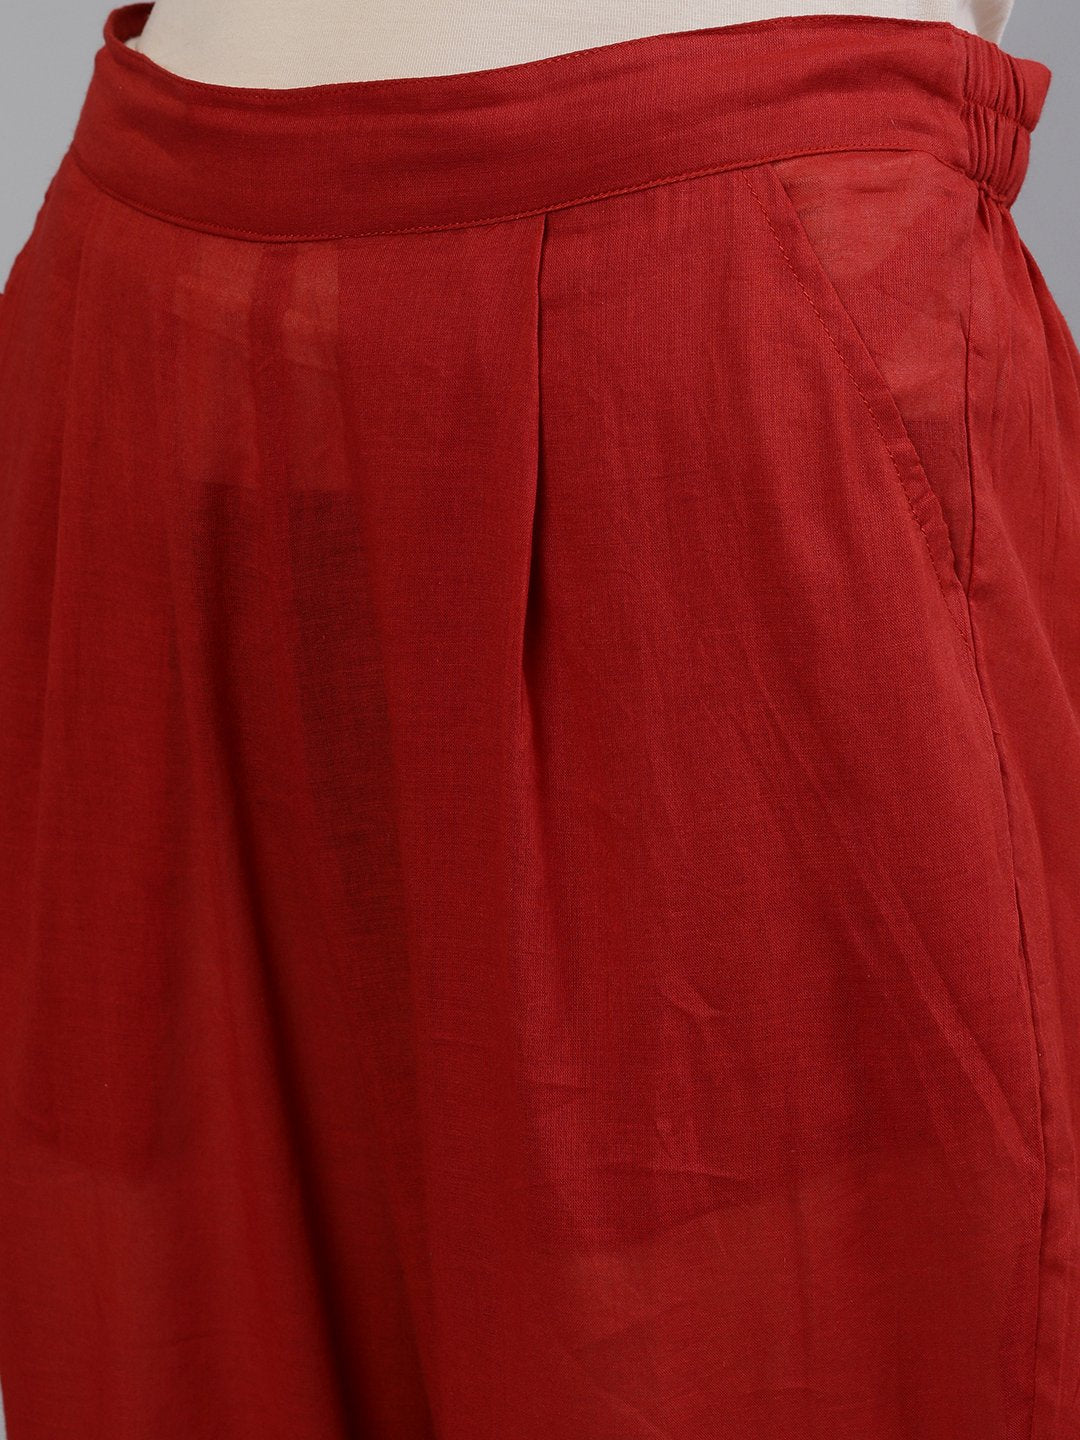 Ishin Women's Rayon Brown Printed A-Line Kurta Trouser Set